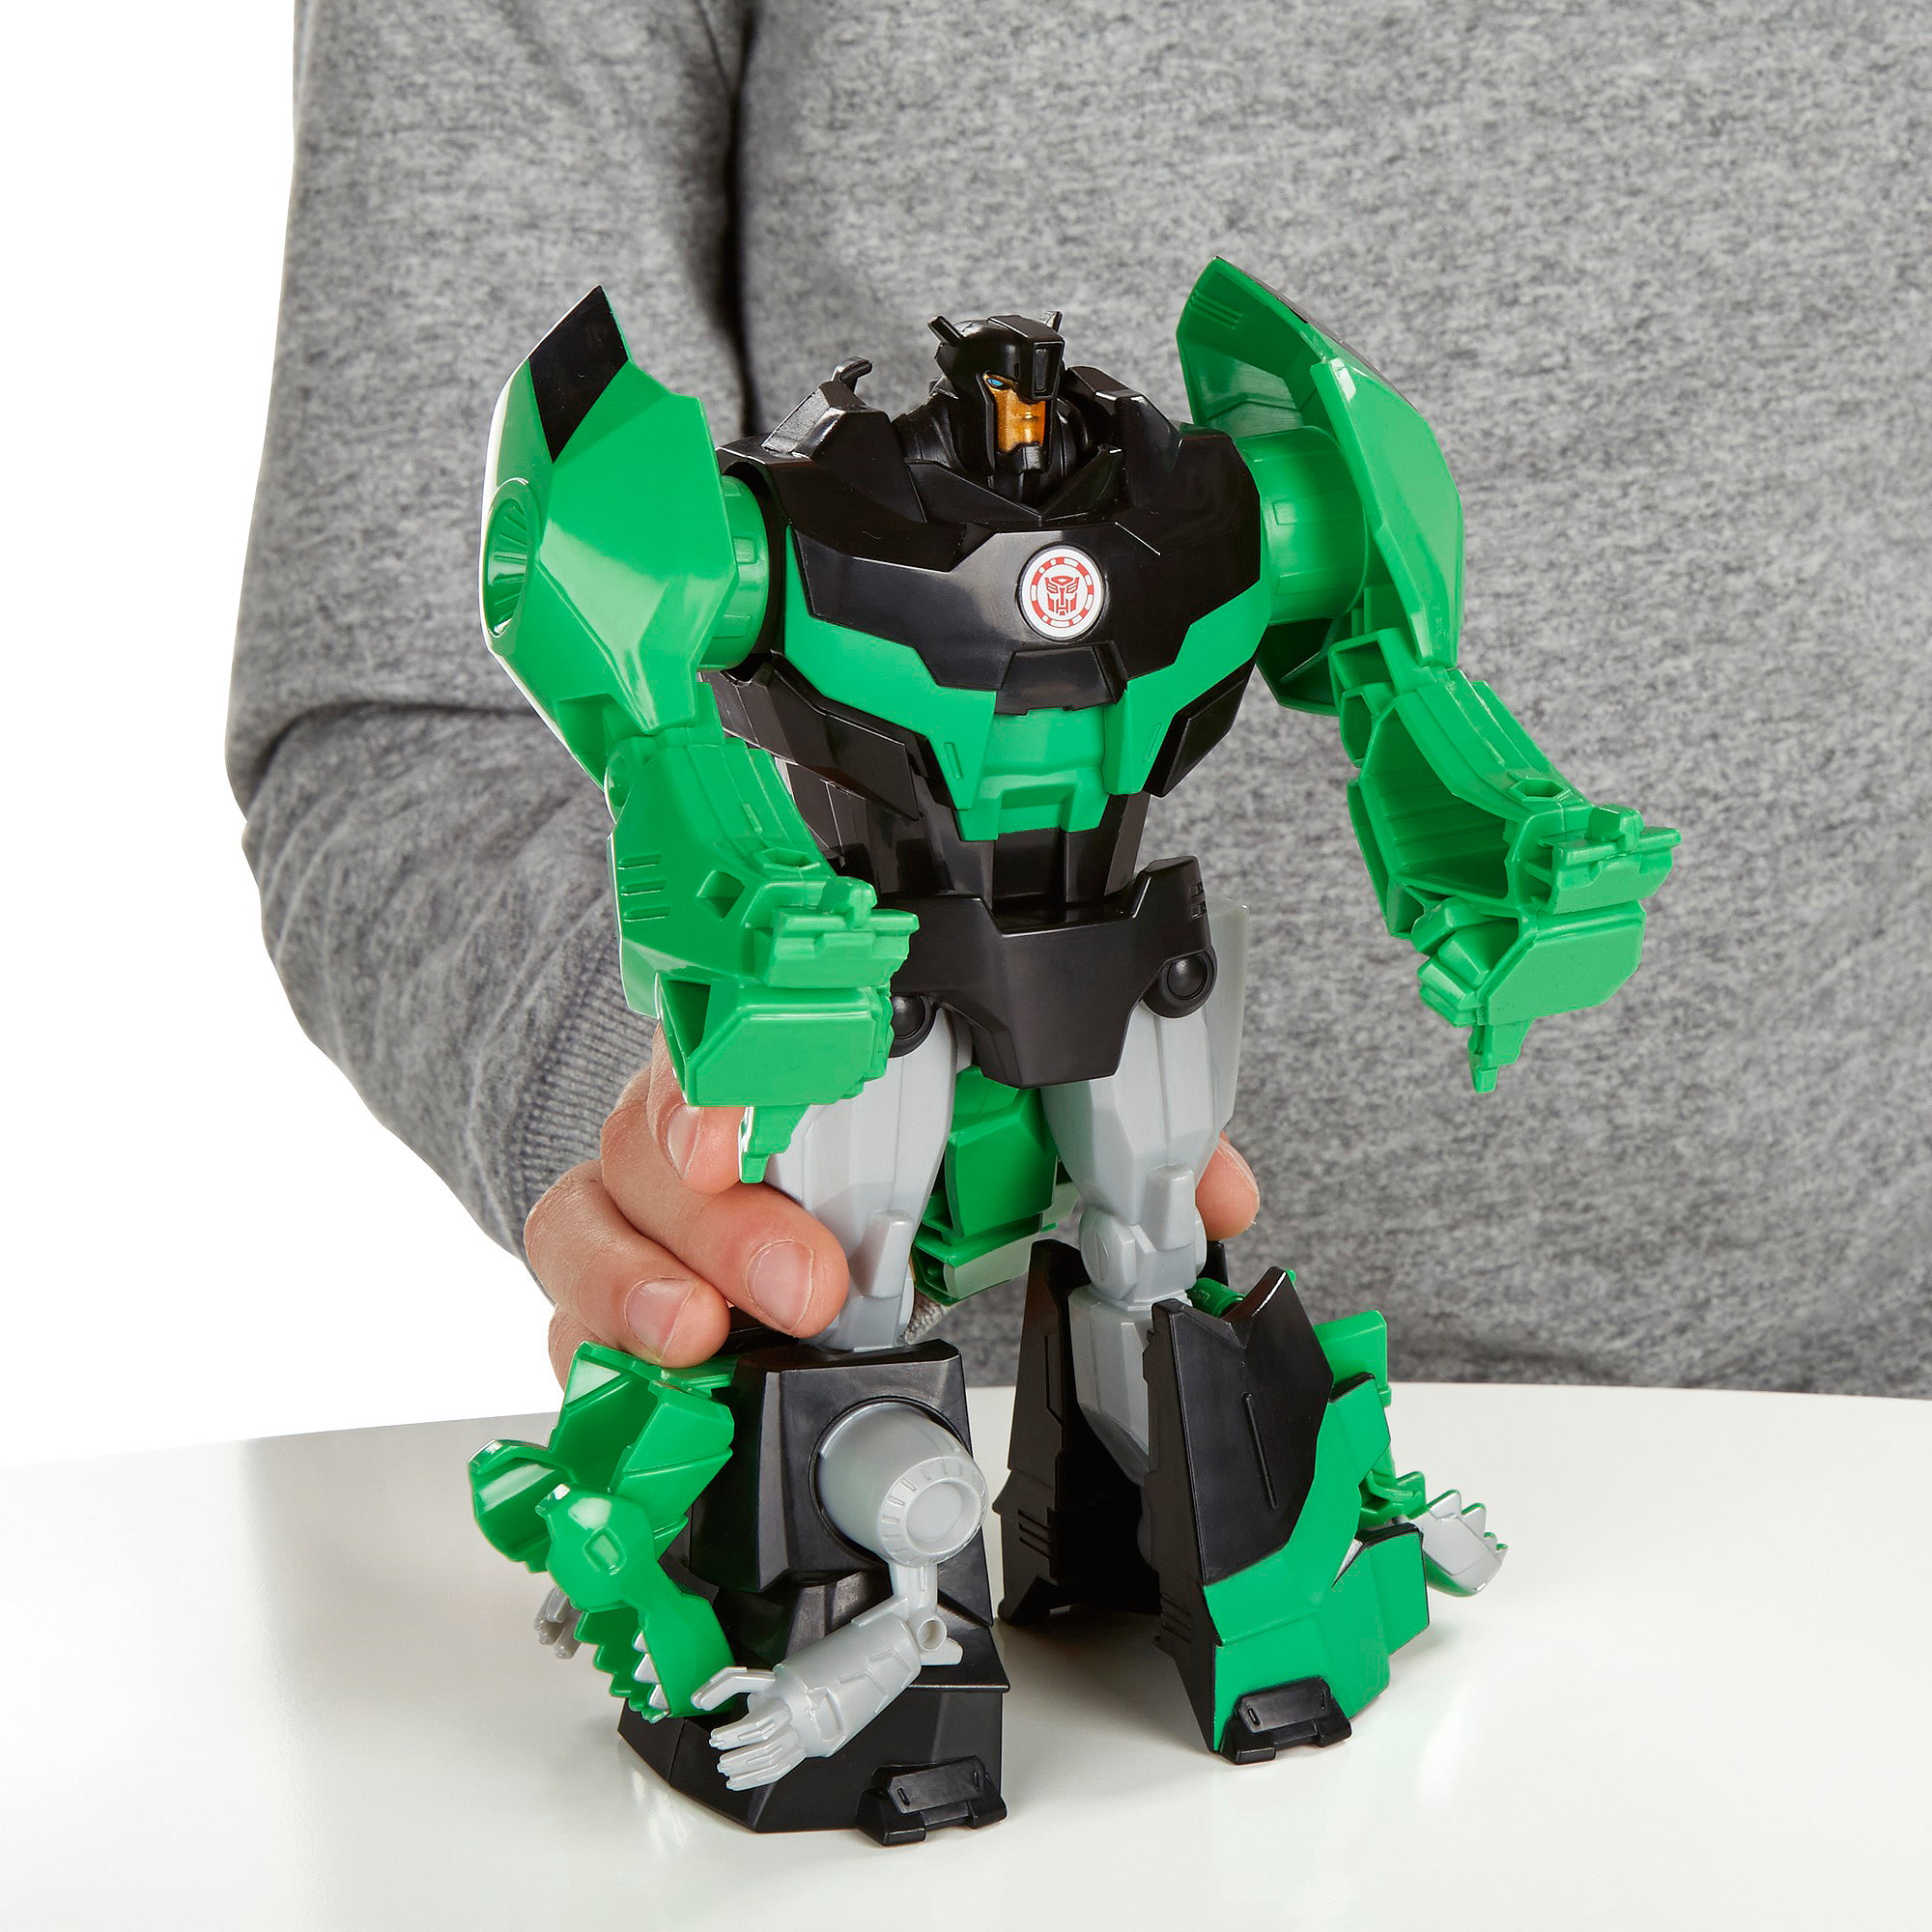 Transformers Robots in Disguise 3-Step Changers Grimlock Figure